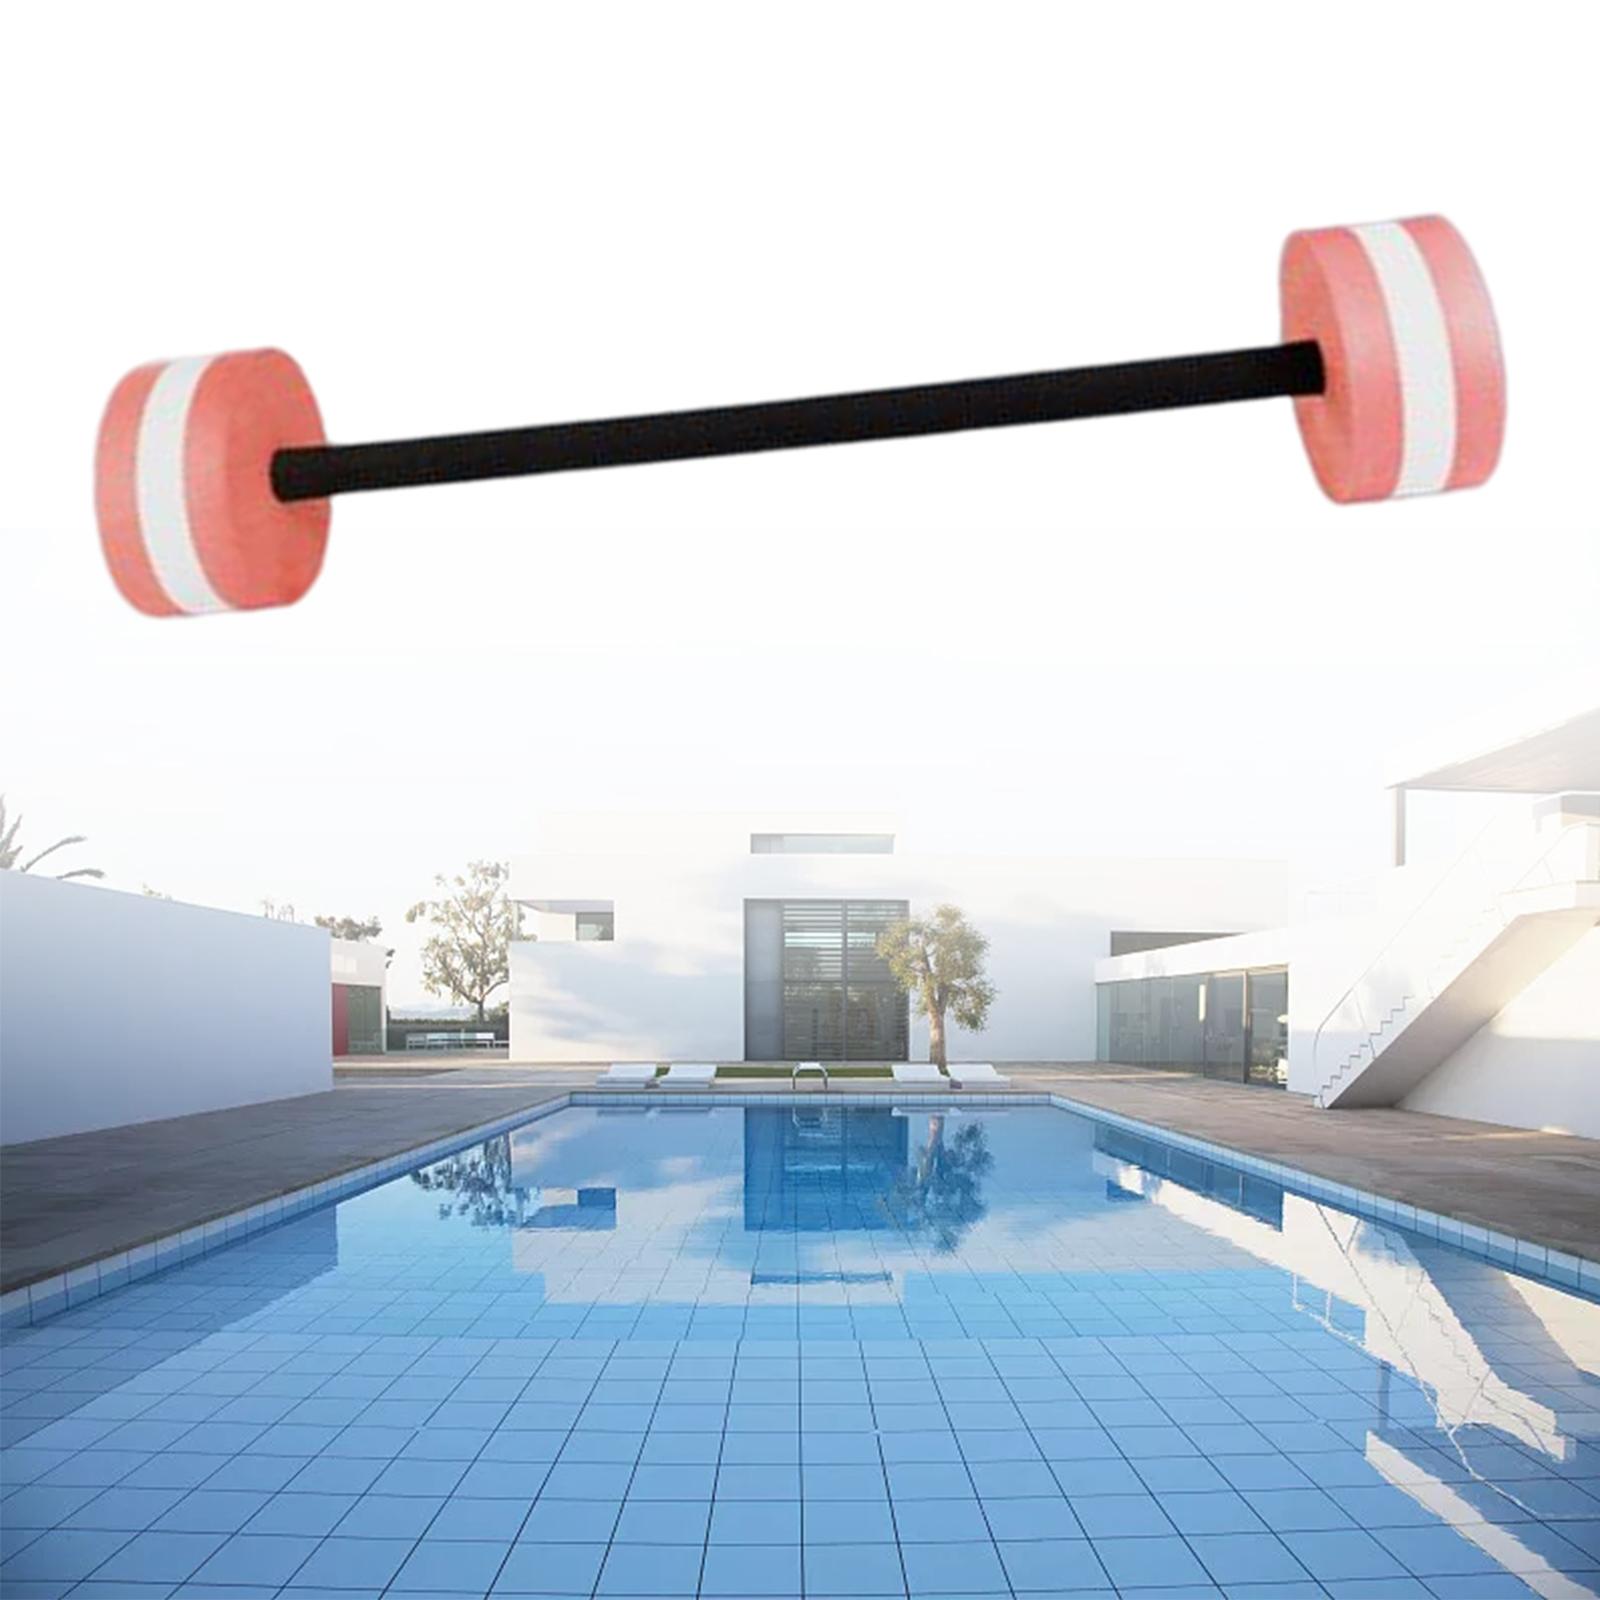 Water Dumbbells Pool Exercise EVA Aquatic Barbell for Men Women Water Sports Pink Color Standard